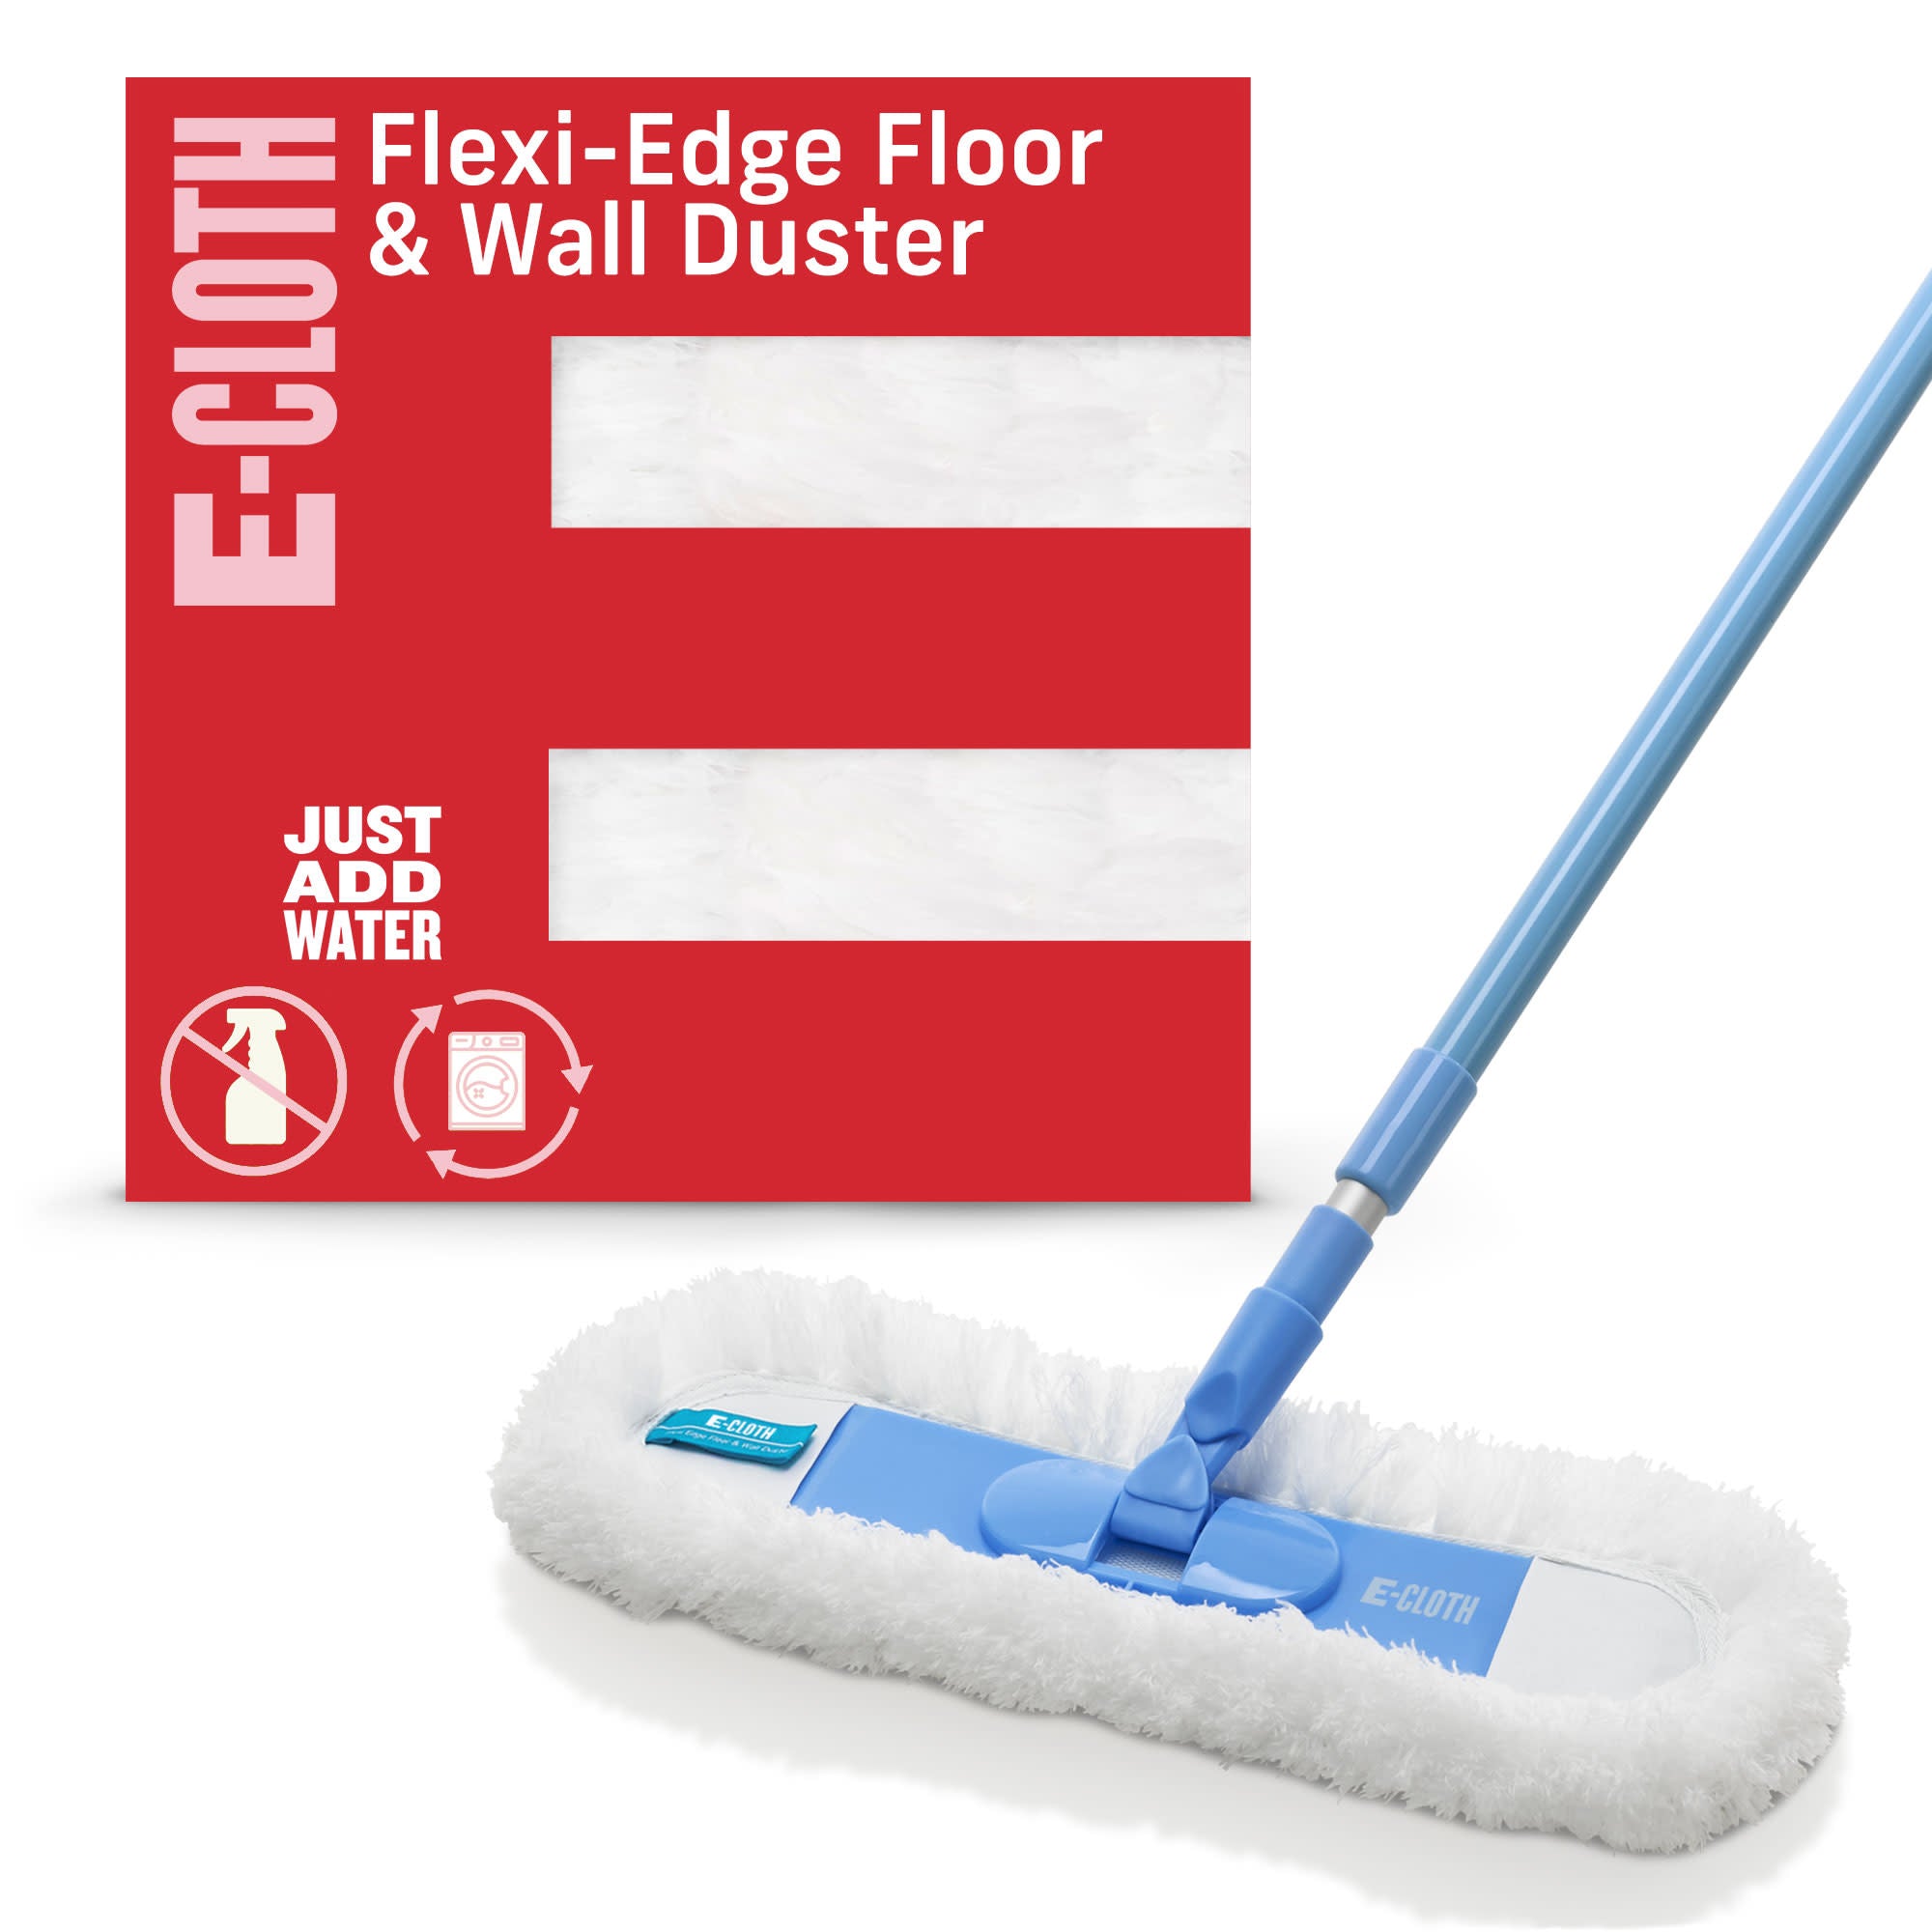 E Flexi-Edge Floor p Wall Duster D JUST ADD L 